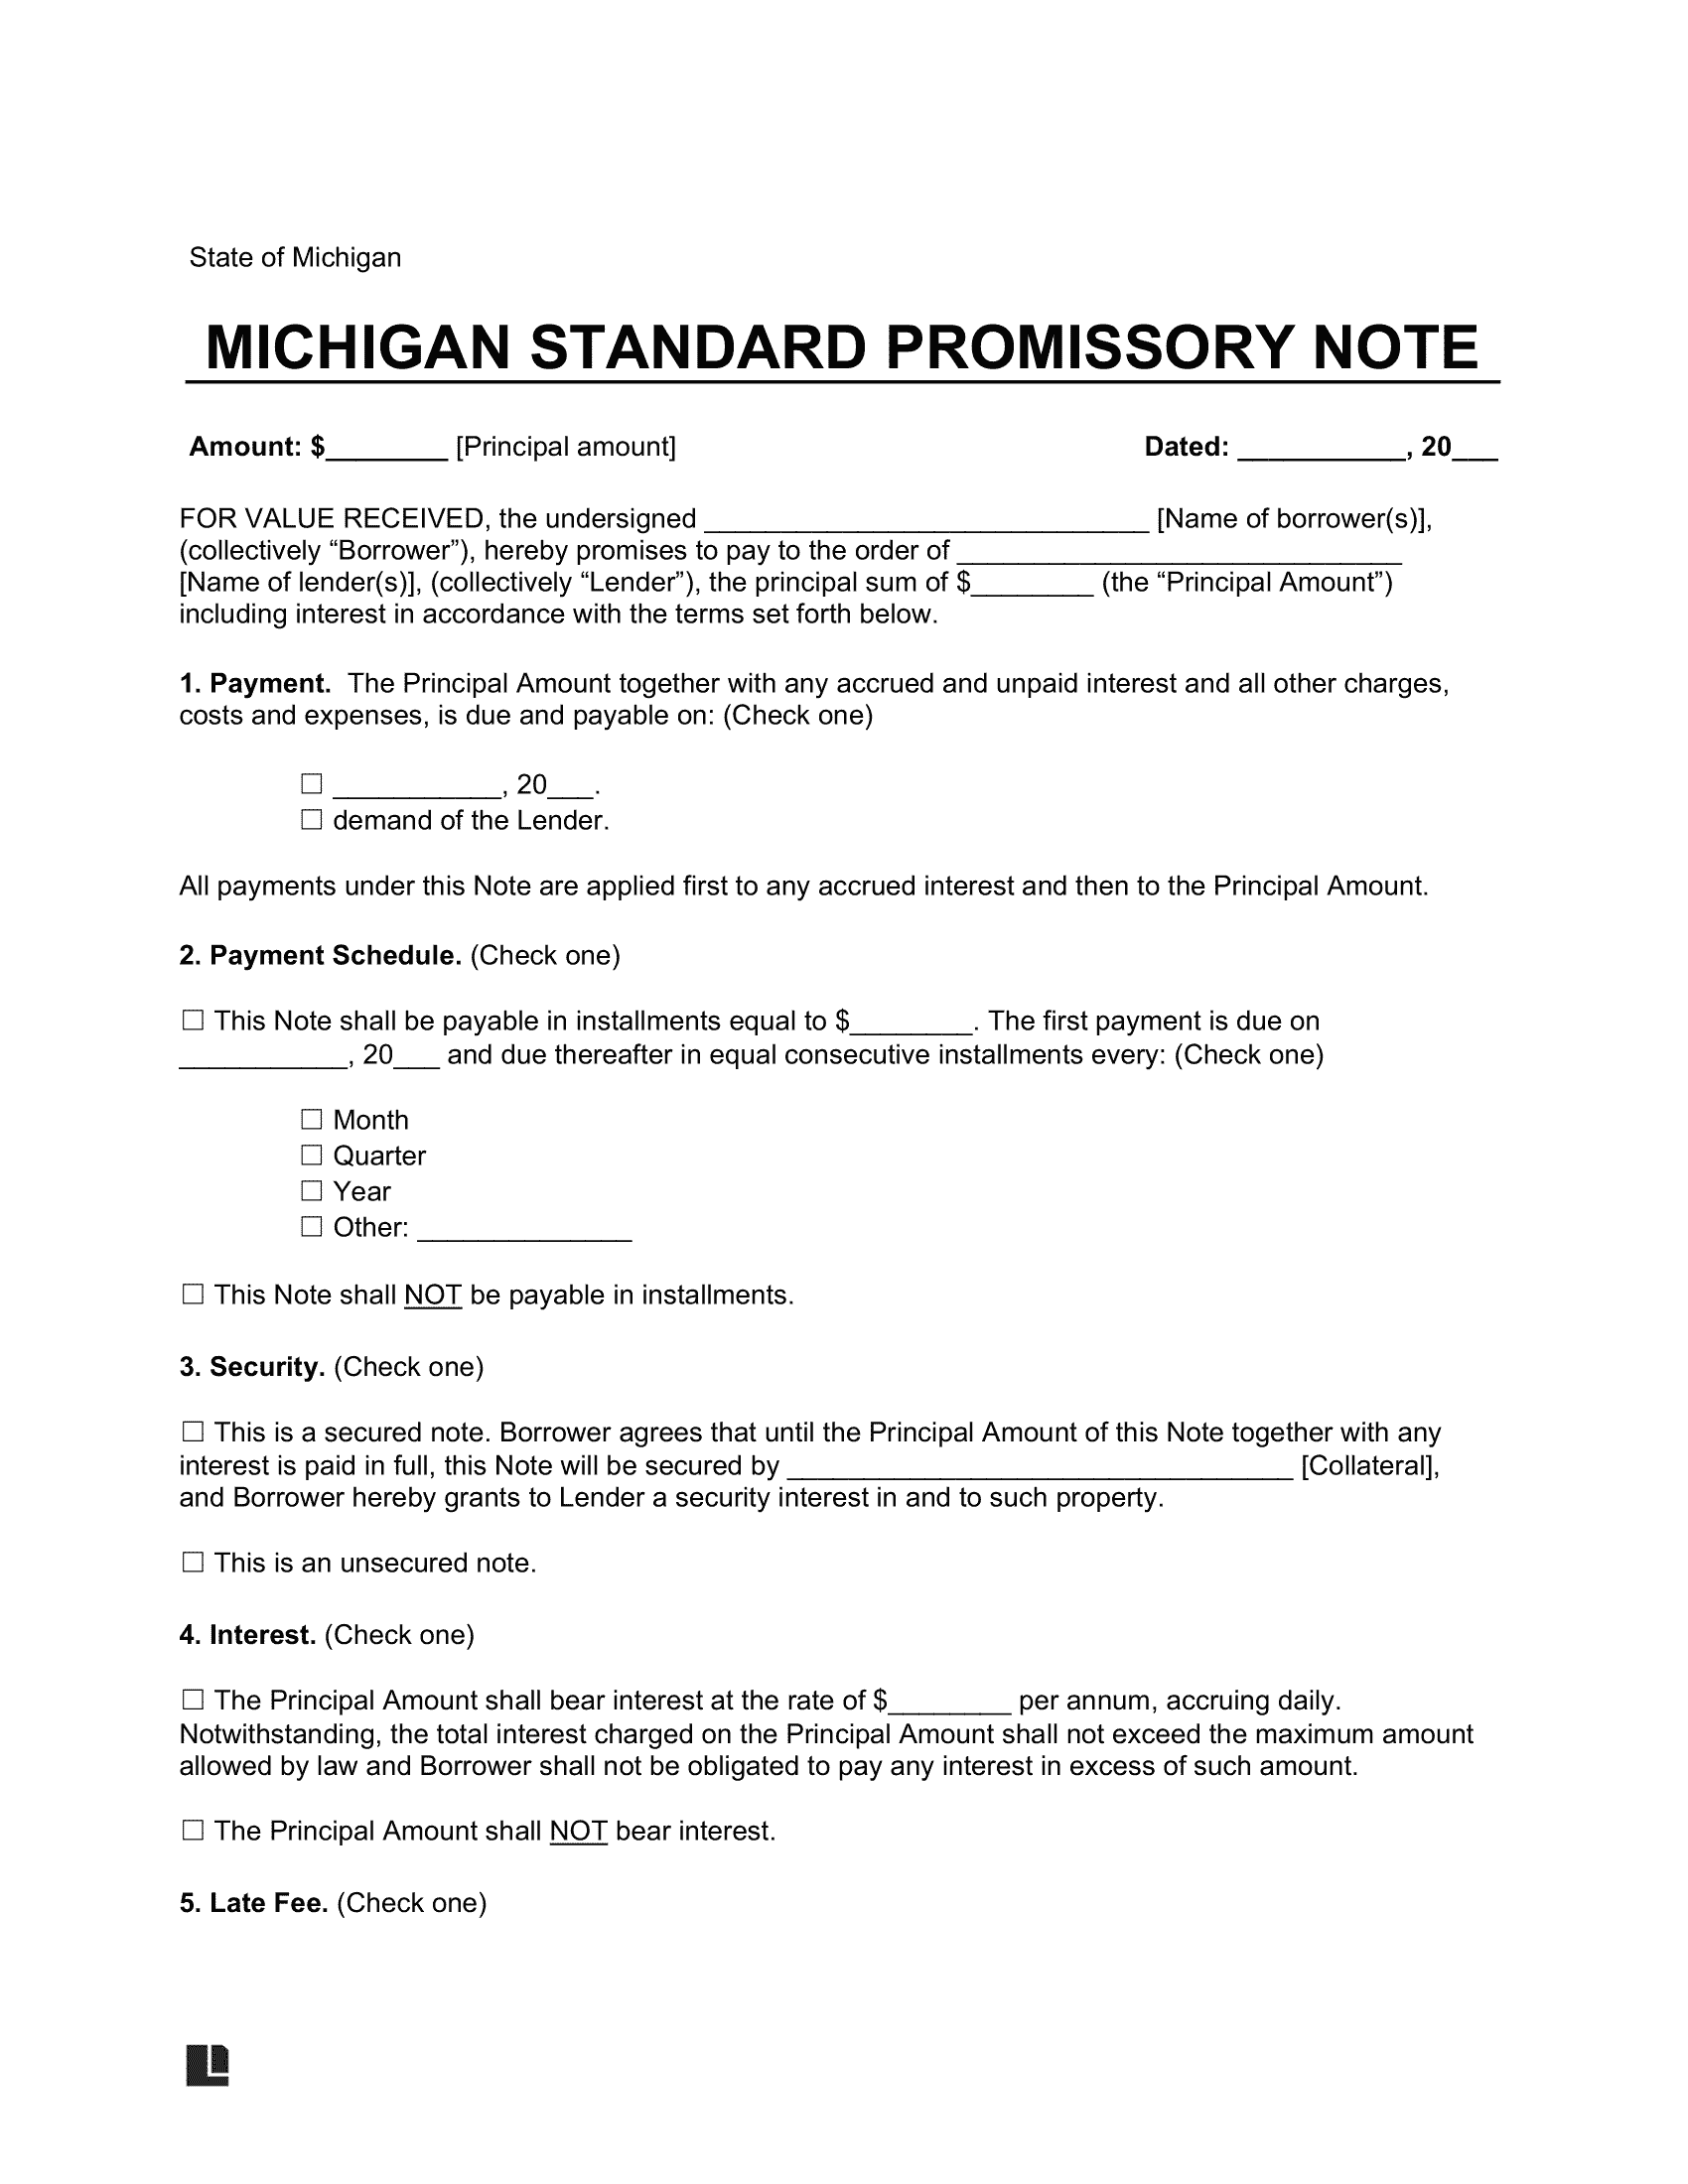 Michigan Standard Promissory Note Template